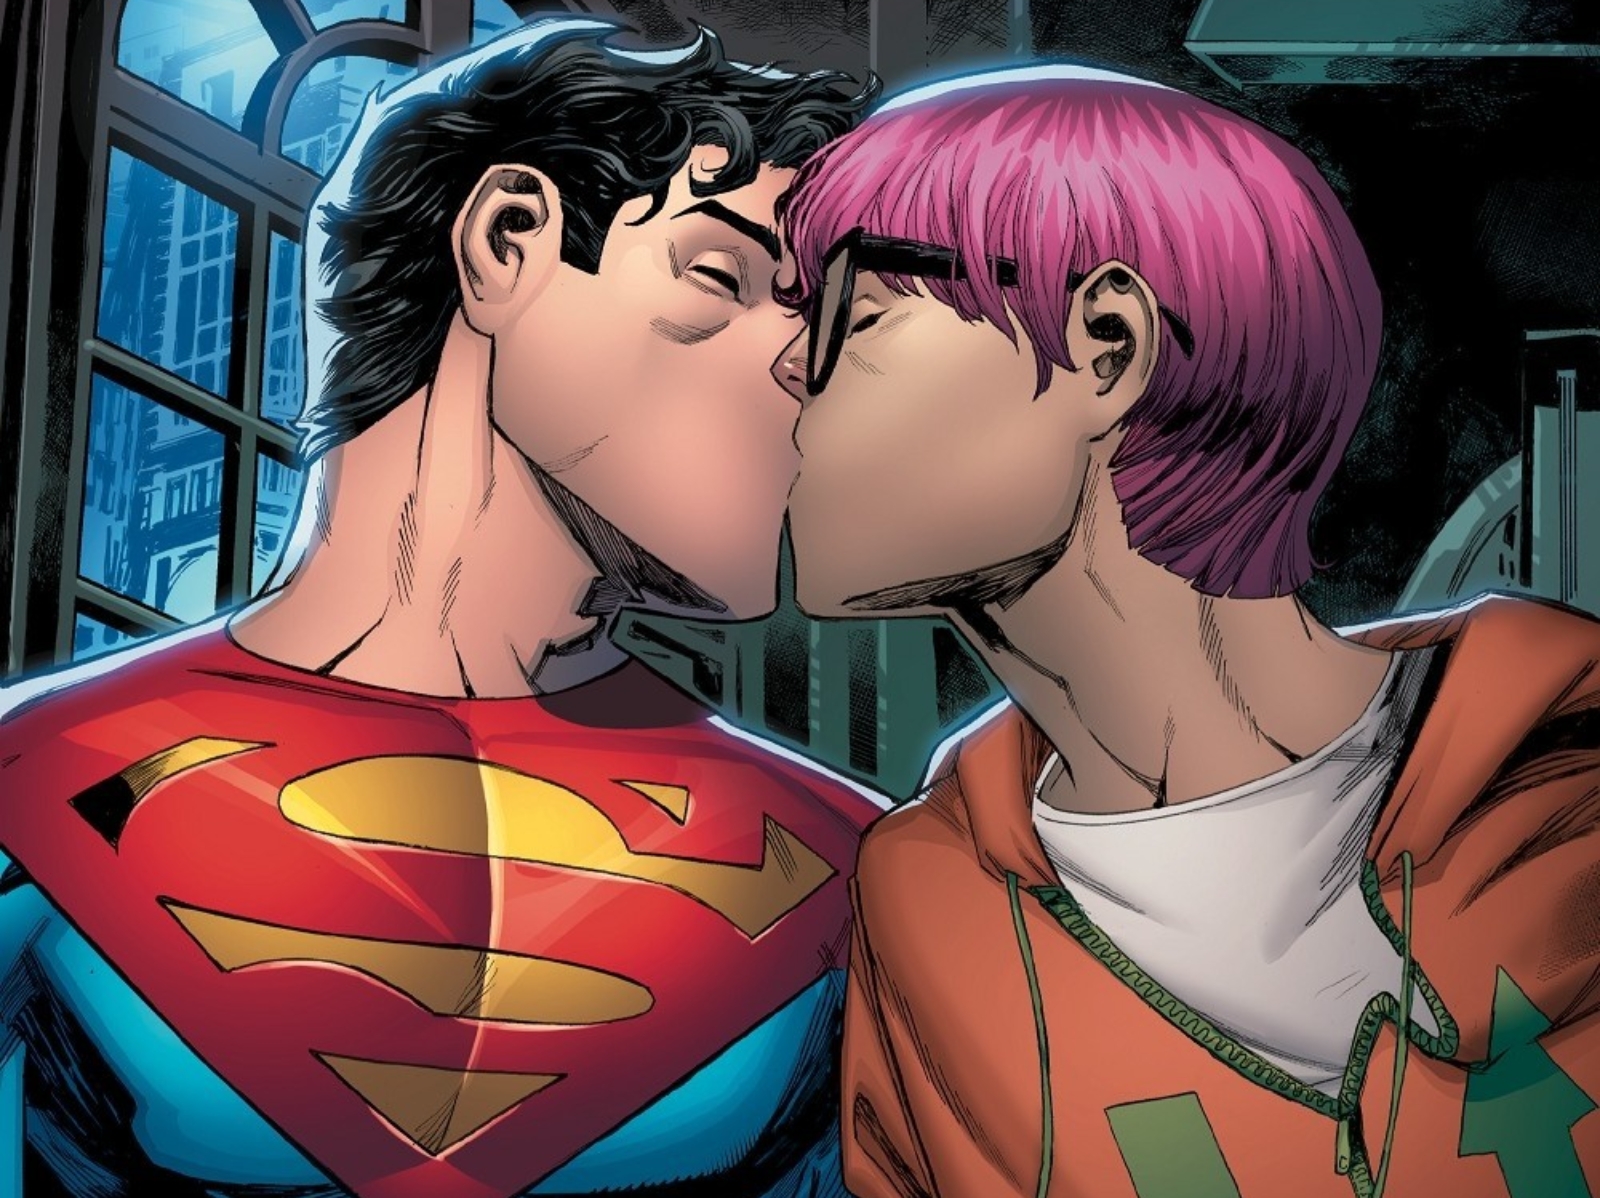 DC 宣布新超人出櫃啦！超級英雄是雙性戀，與亞裔男友交往「接吻照」曬恩愛！